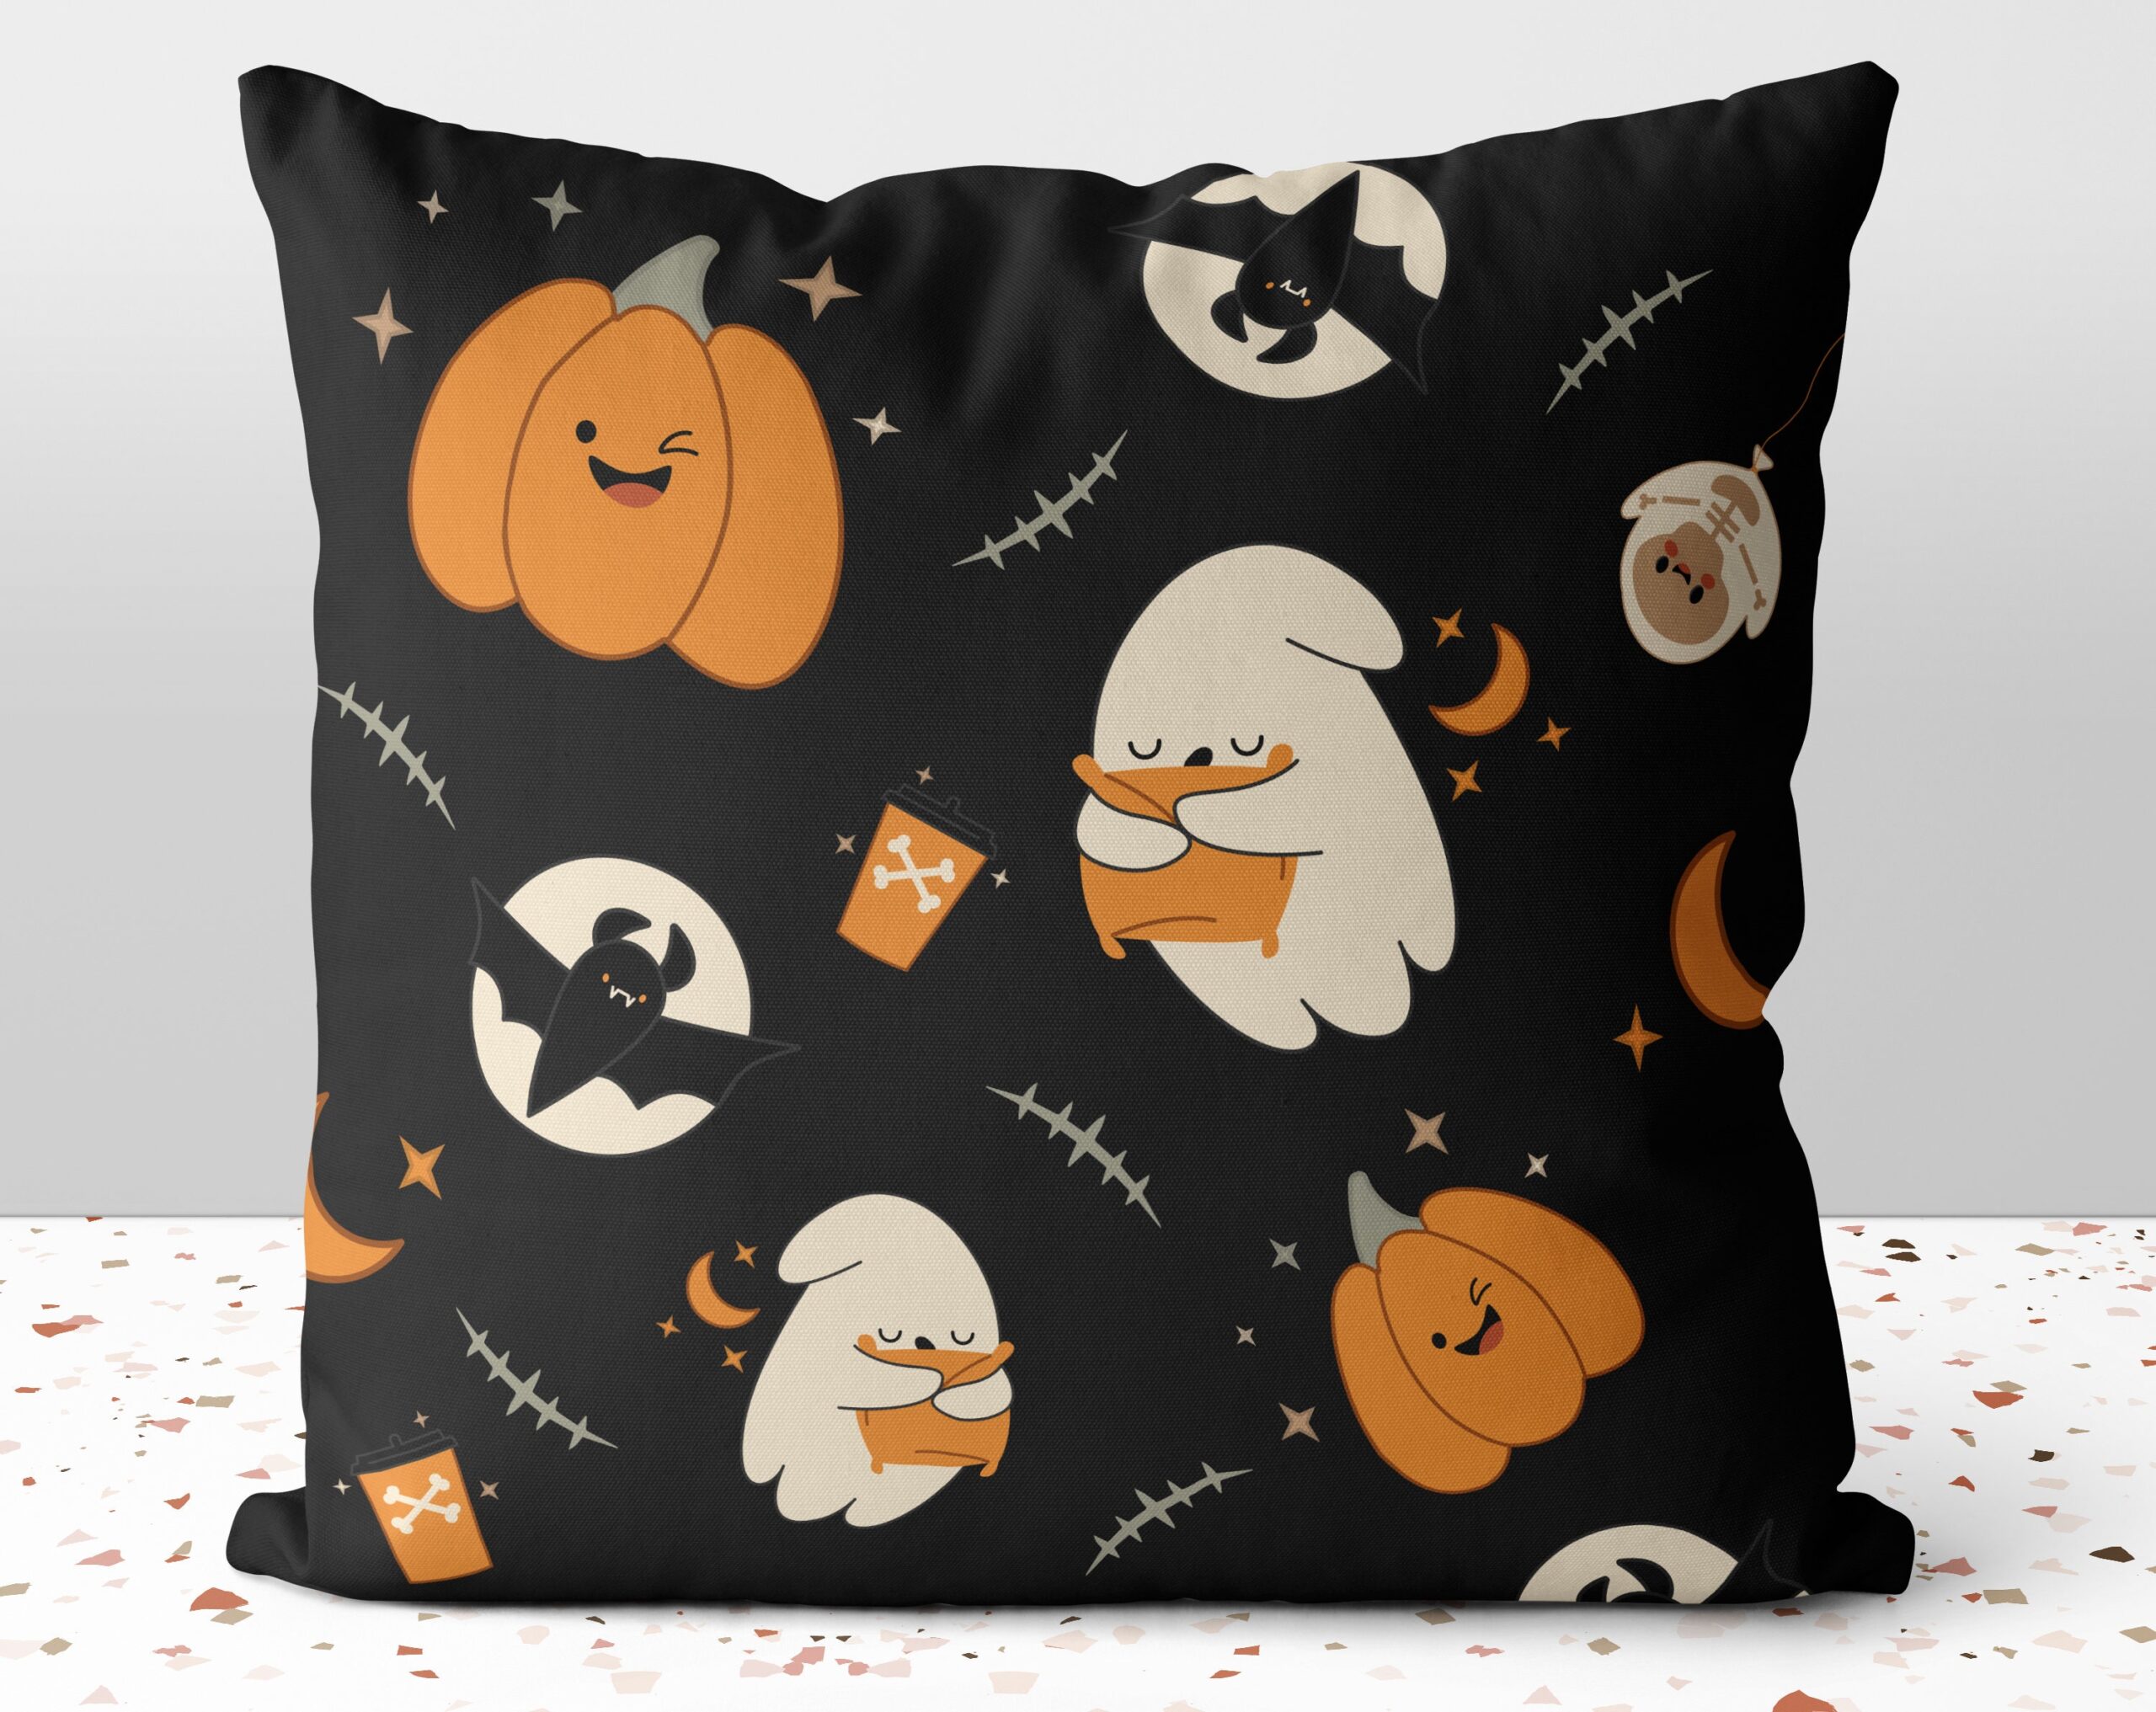 Halloween Jack O'lantern Bats Sleepy Ghosts Orange Dark Decor Square Pillow Cover Throw With Insert